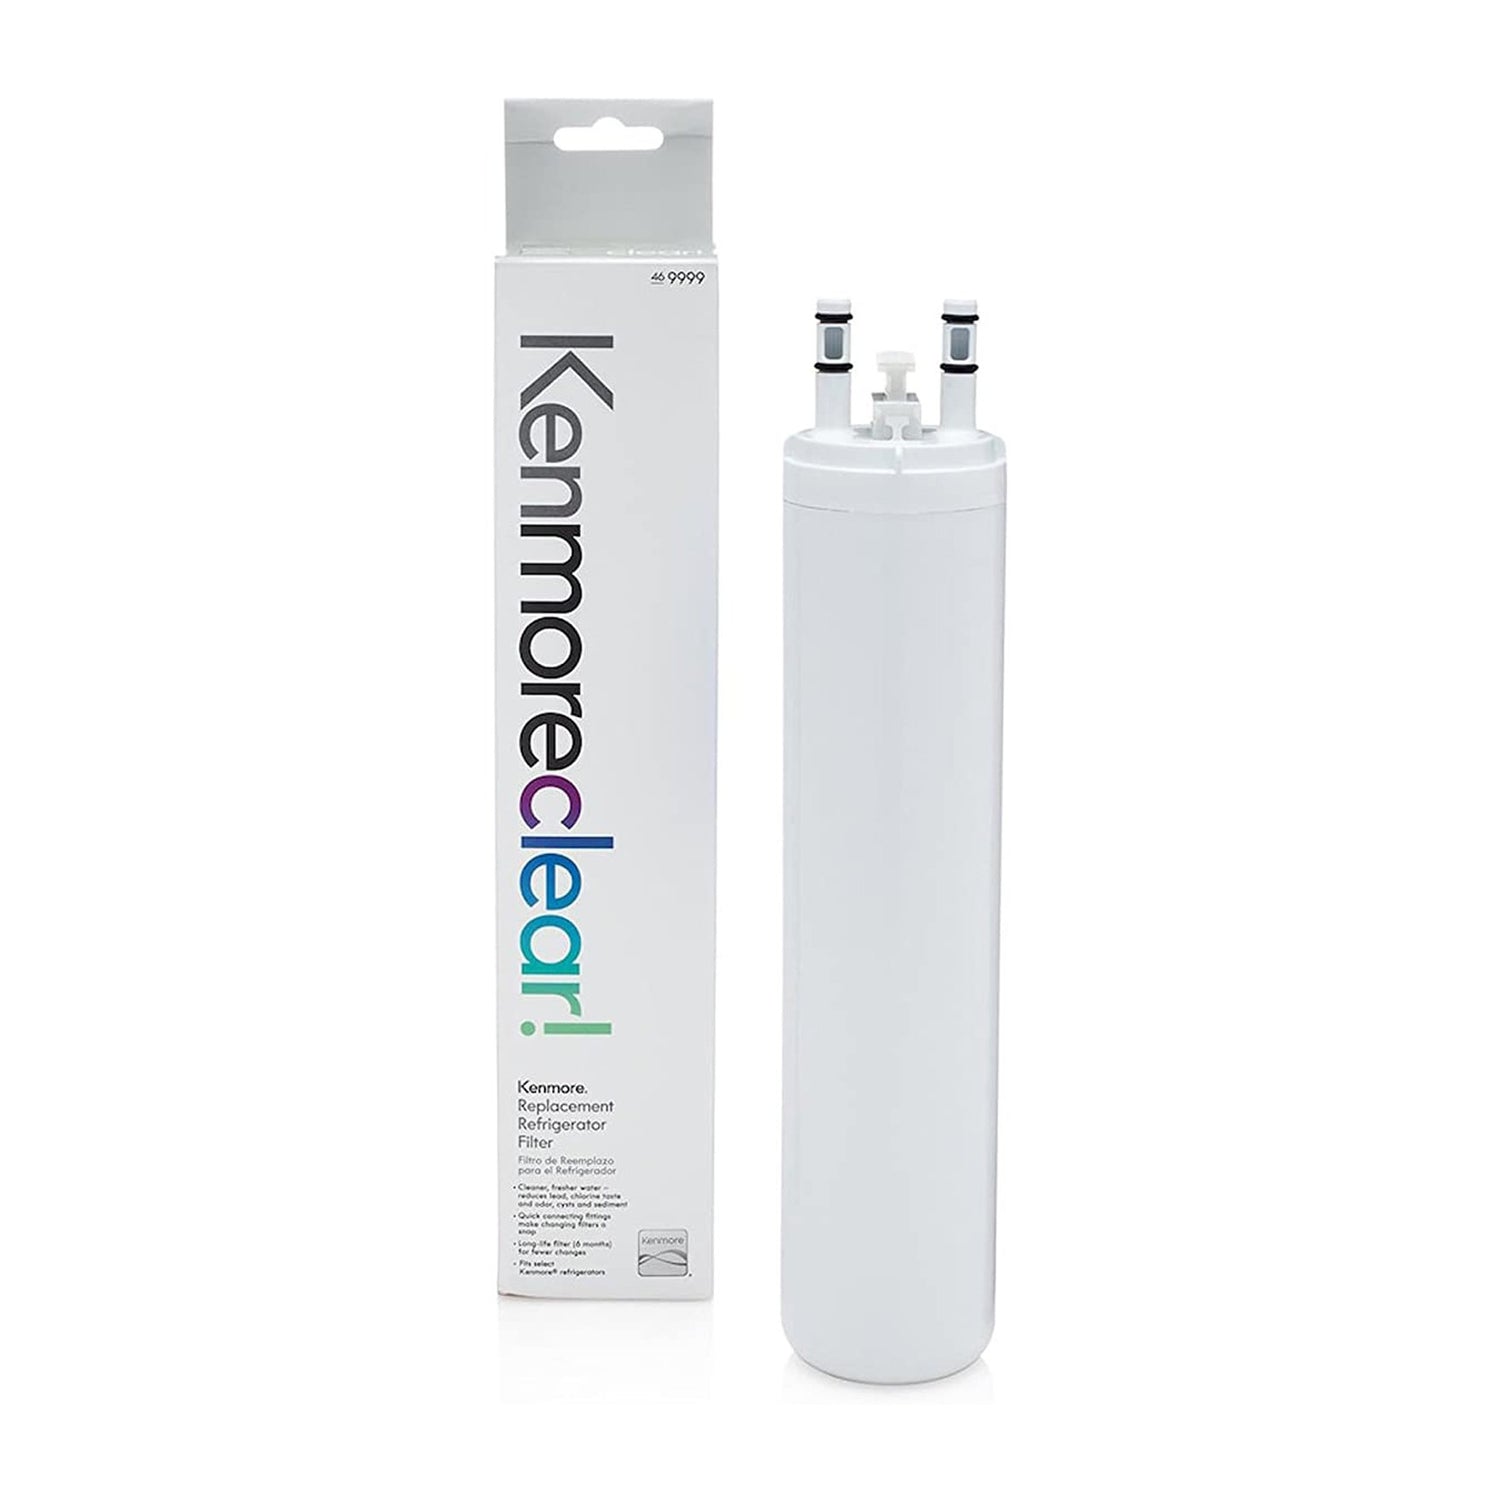 Kenmore 9999 - 46-9999, 469999, Replacement Refrigerator Water Filter